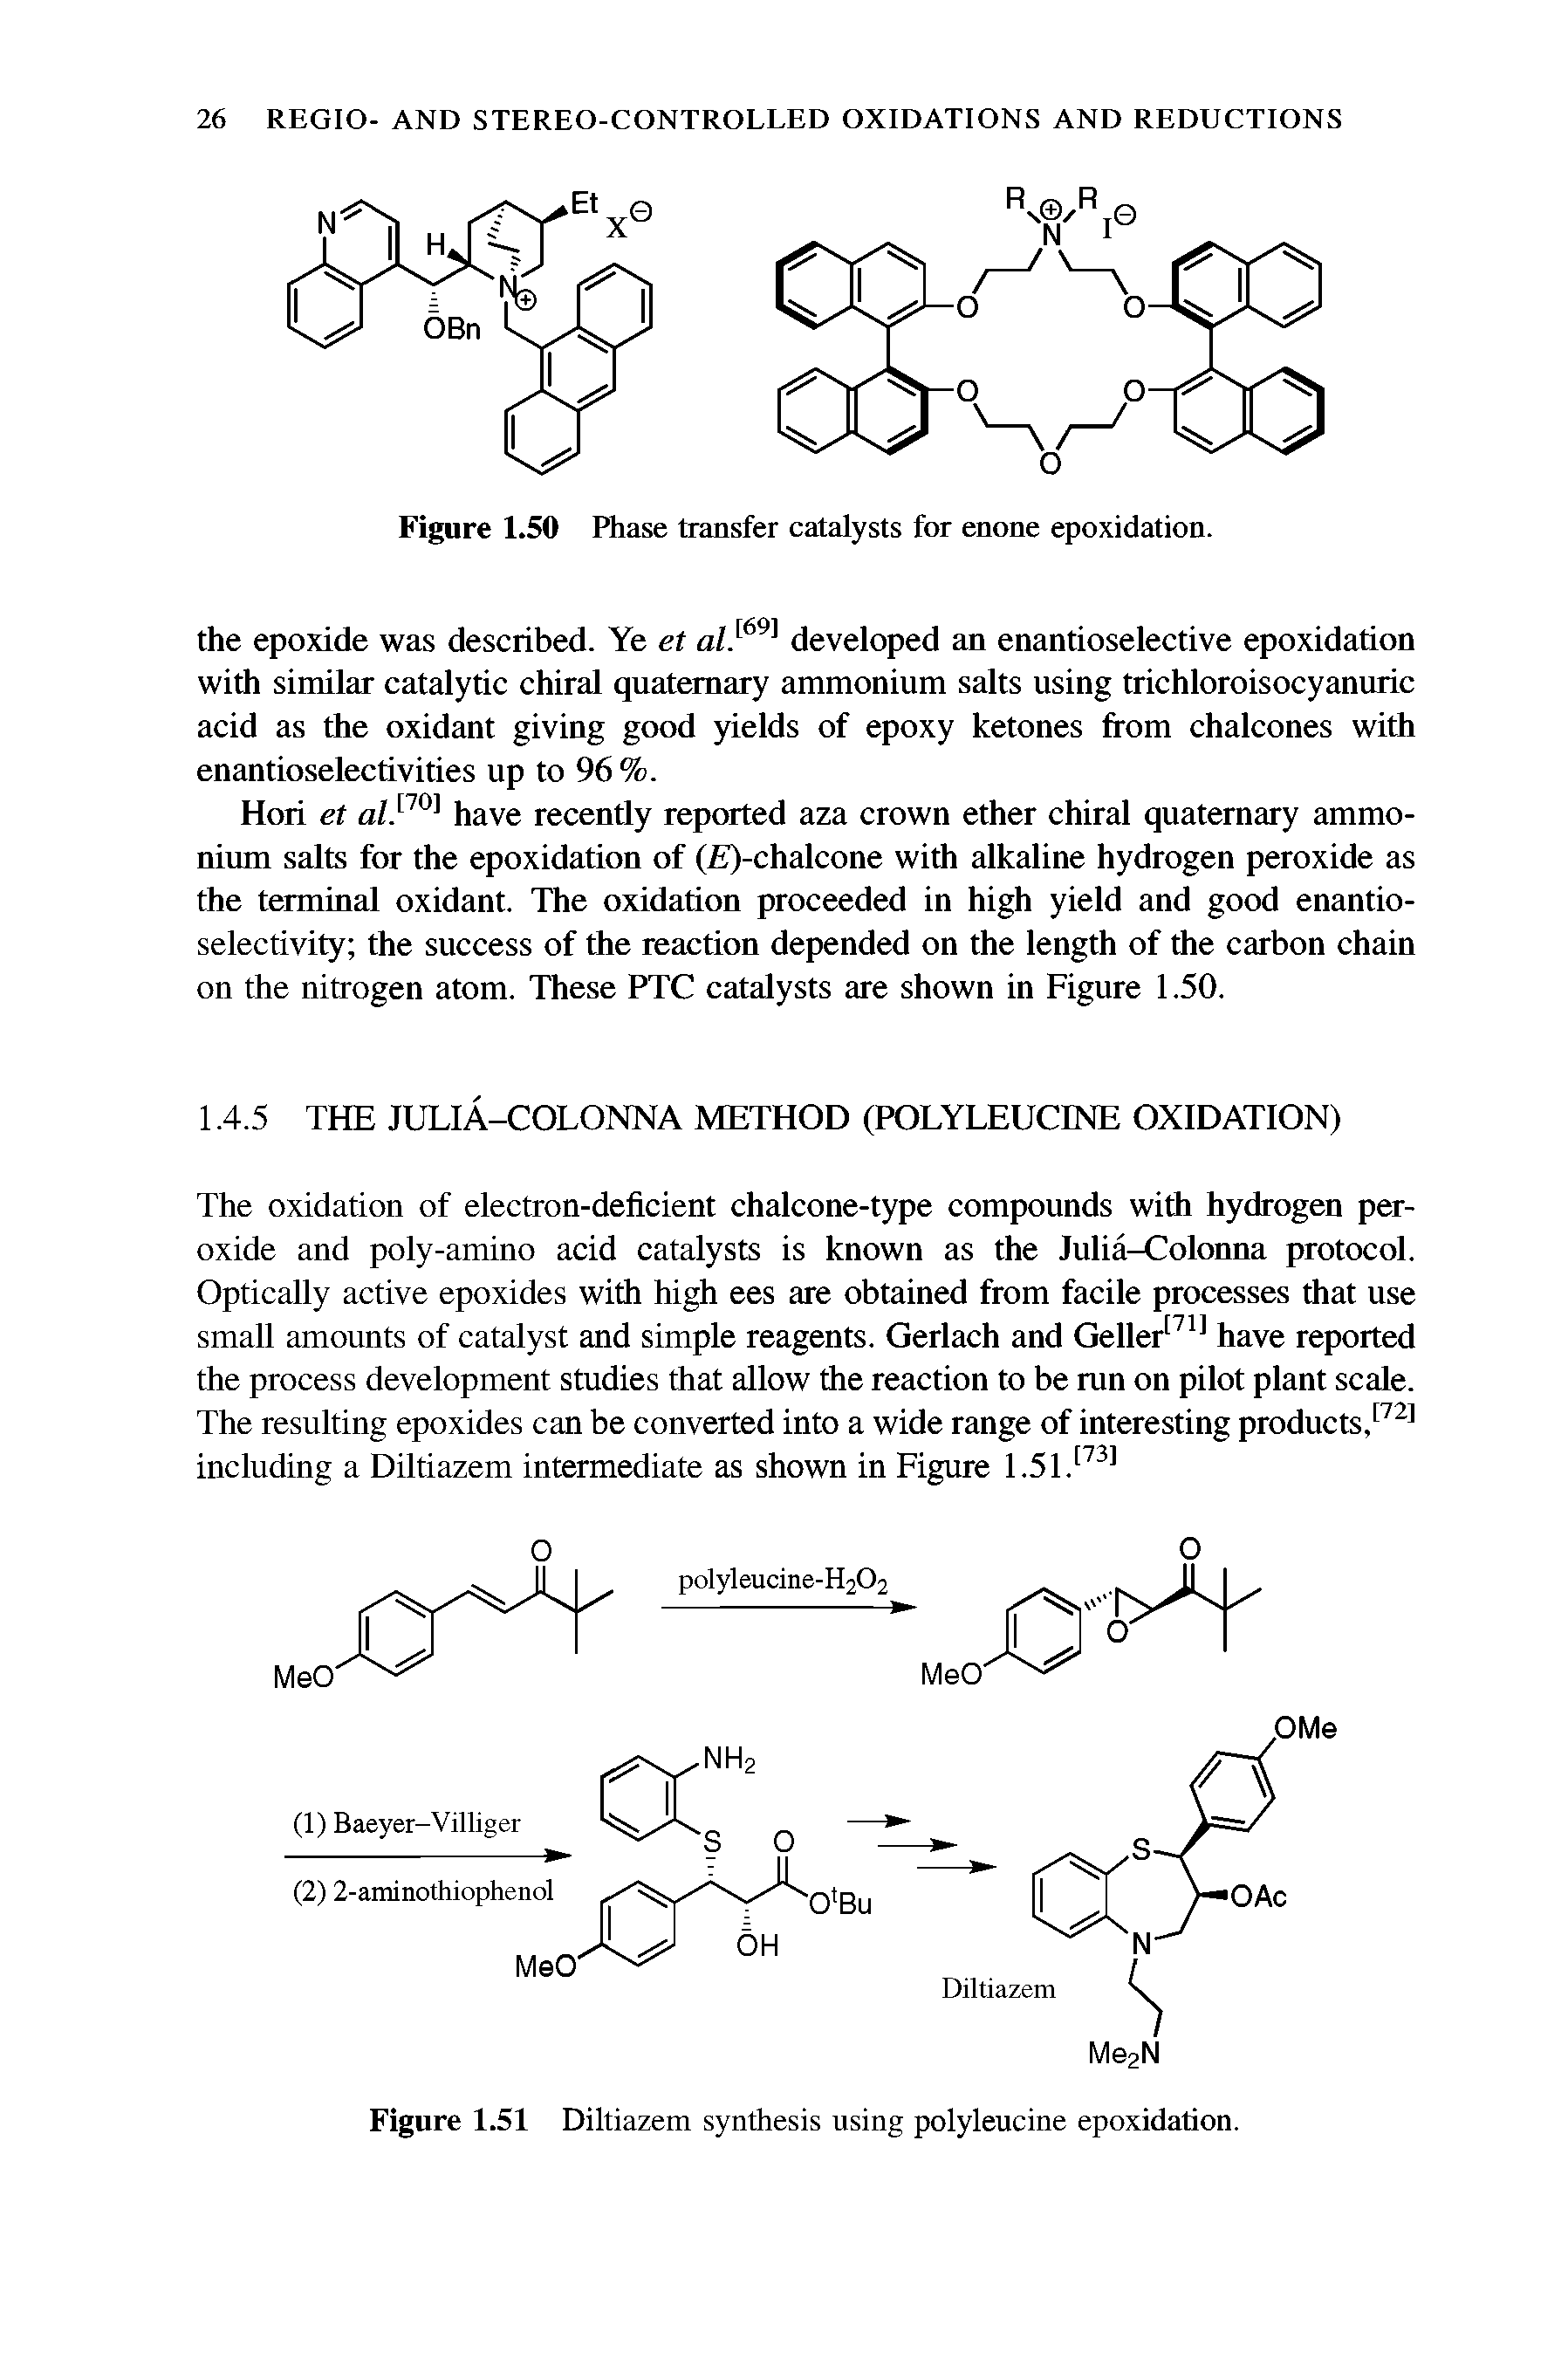 Figure 1.51 Diltiazem synthesis using polyleucine epoxidation.